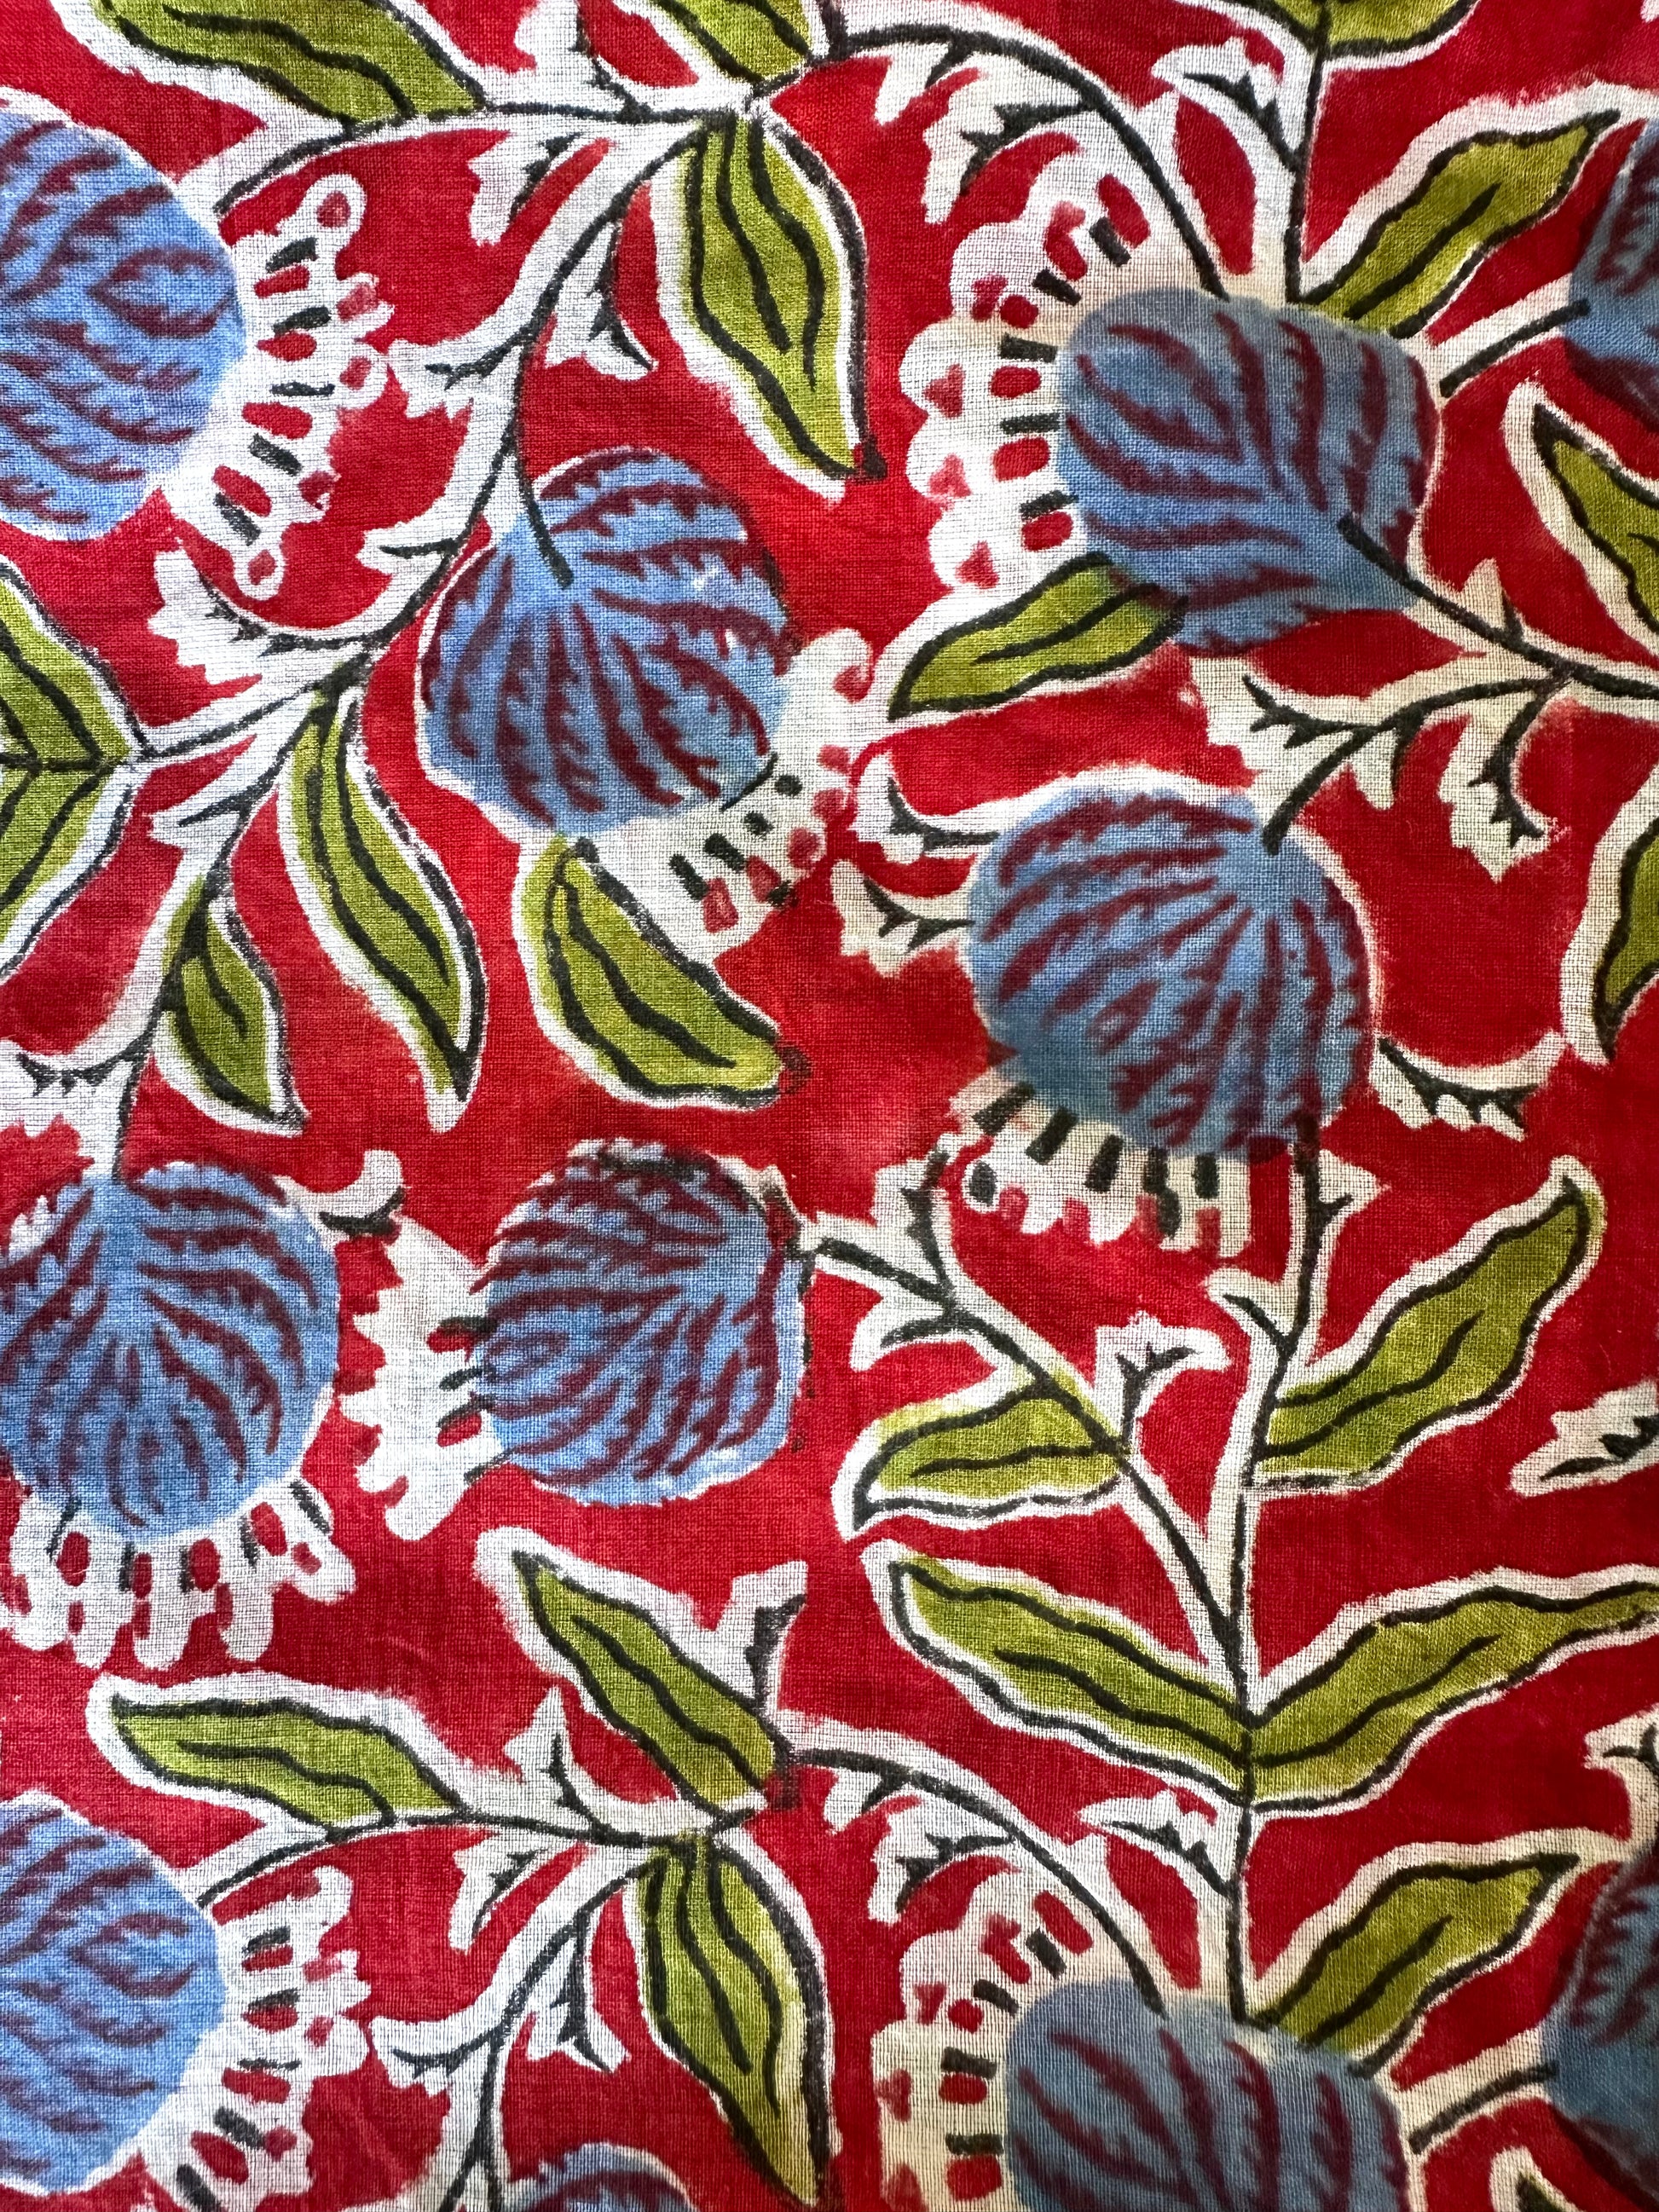 Red Block Print Fabric, Hand Block Print Cotton Fabric, Indian